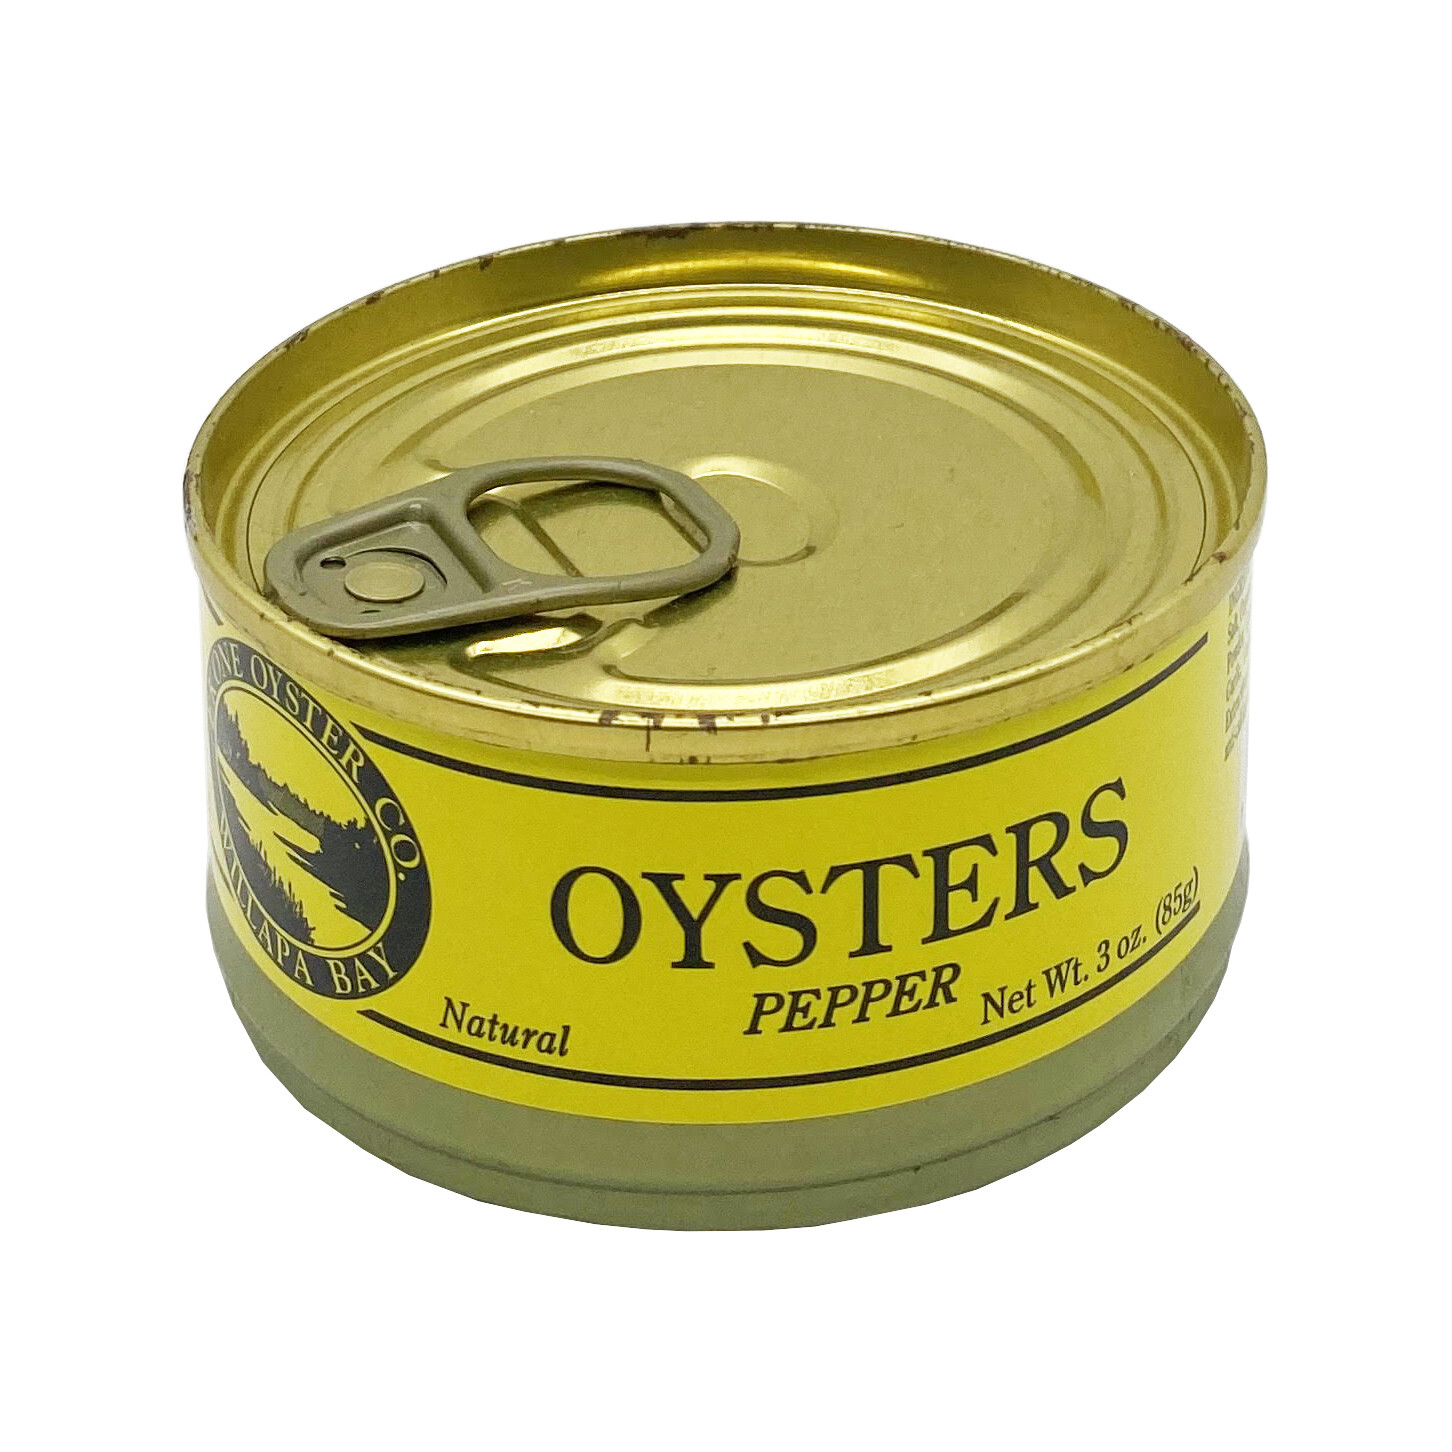 Ekone Oyster Co. Lemon Pepper Smoked Oysters 3oz